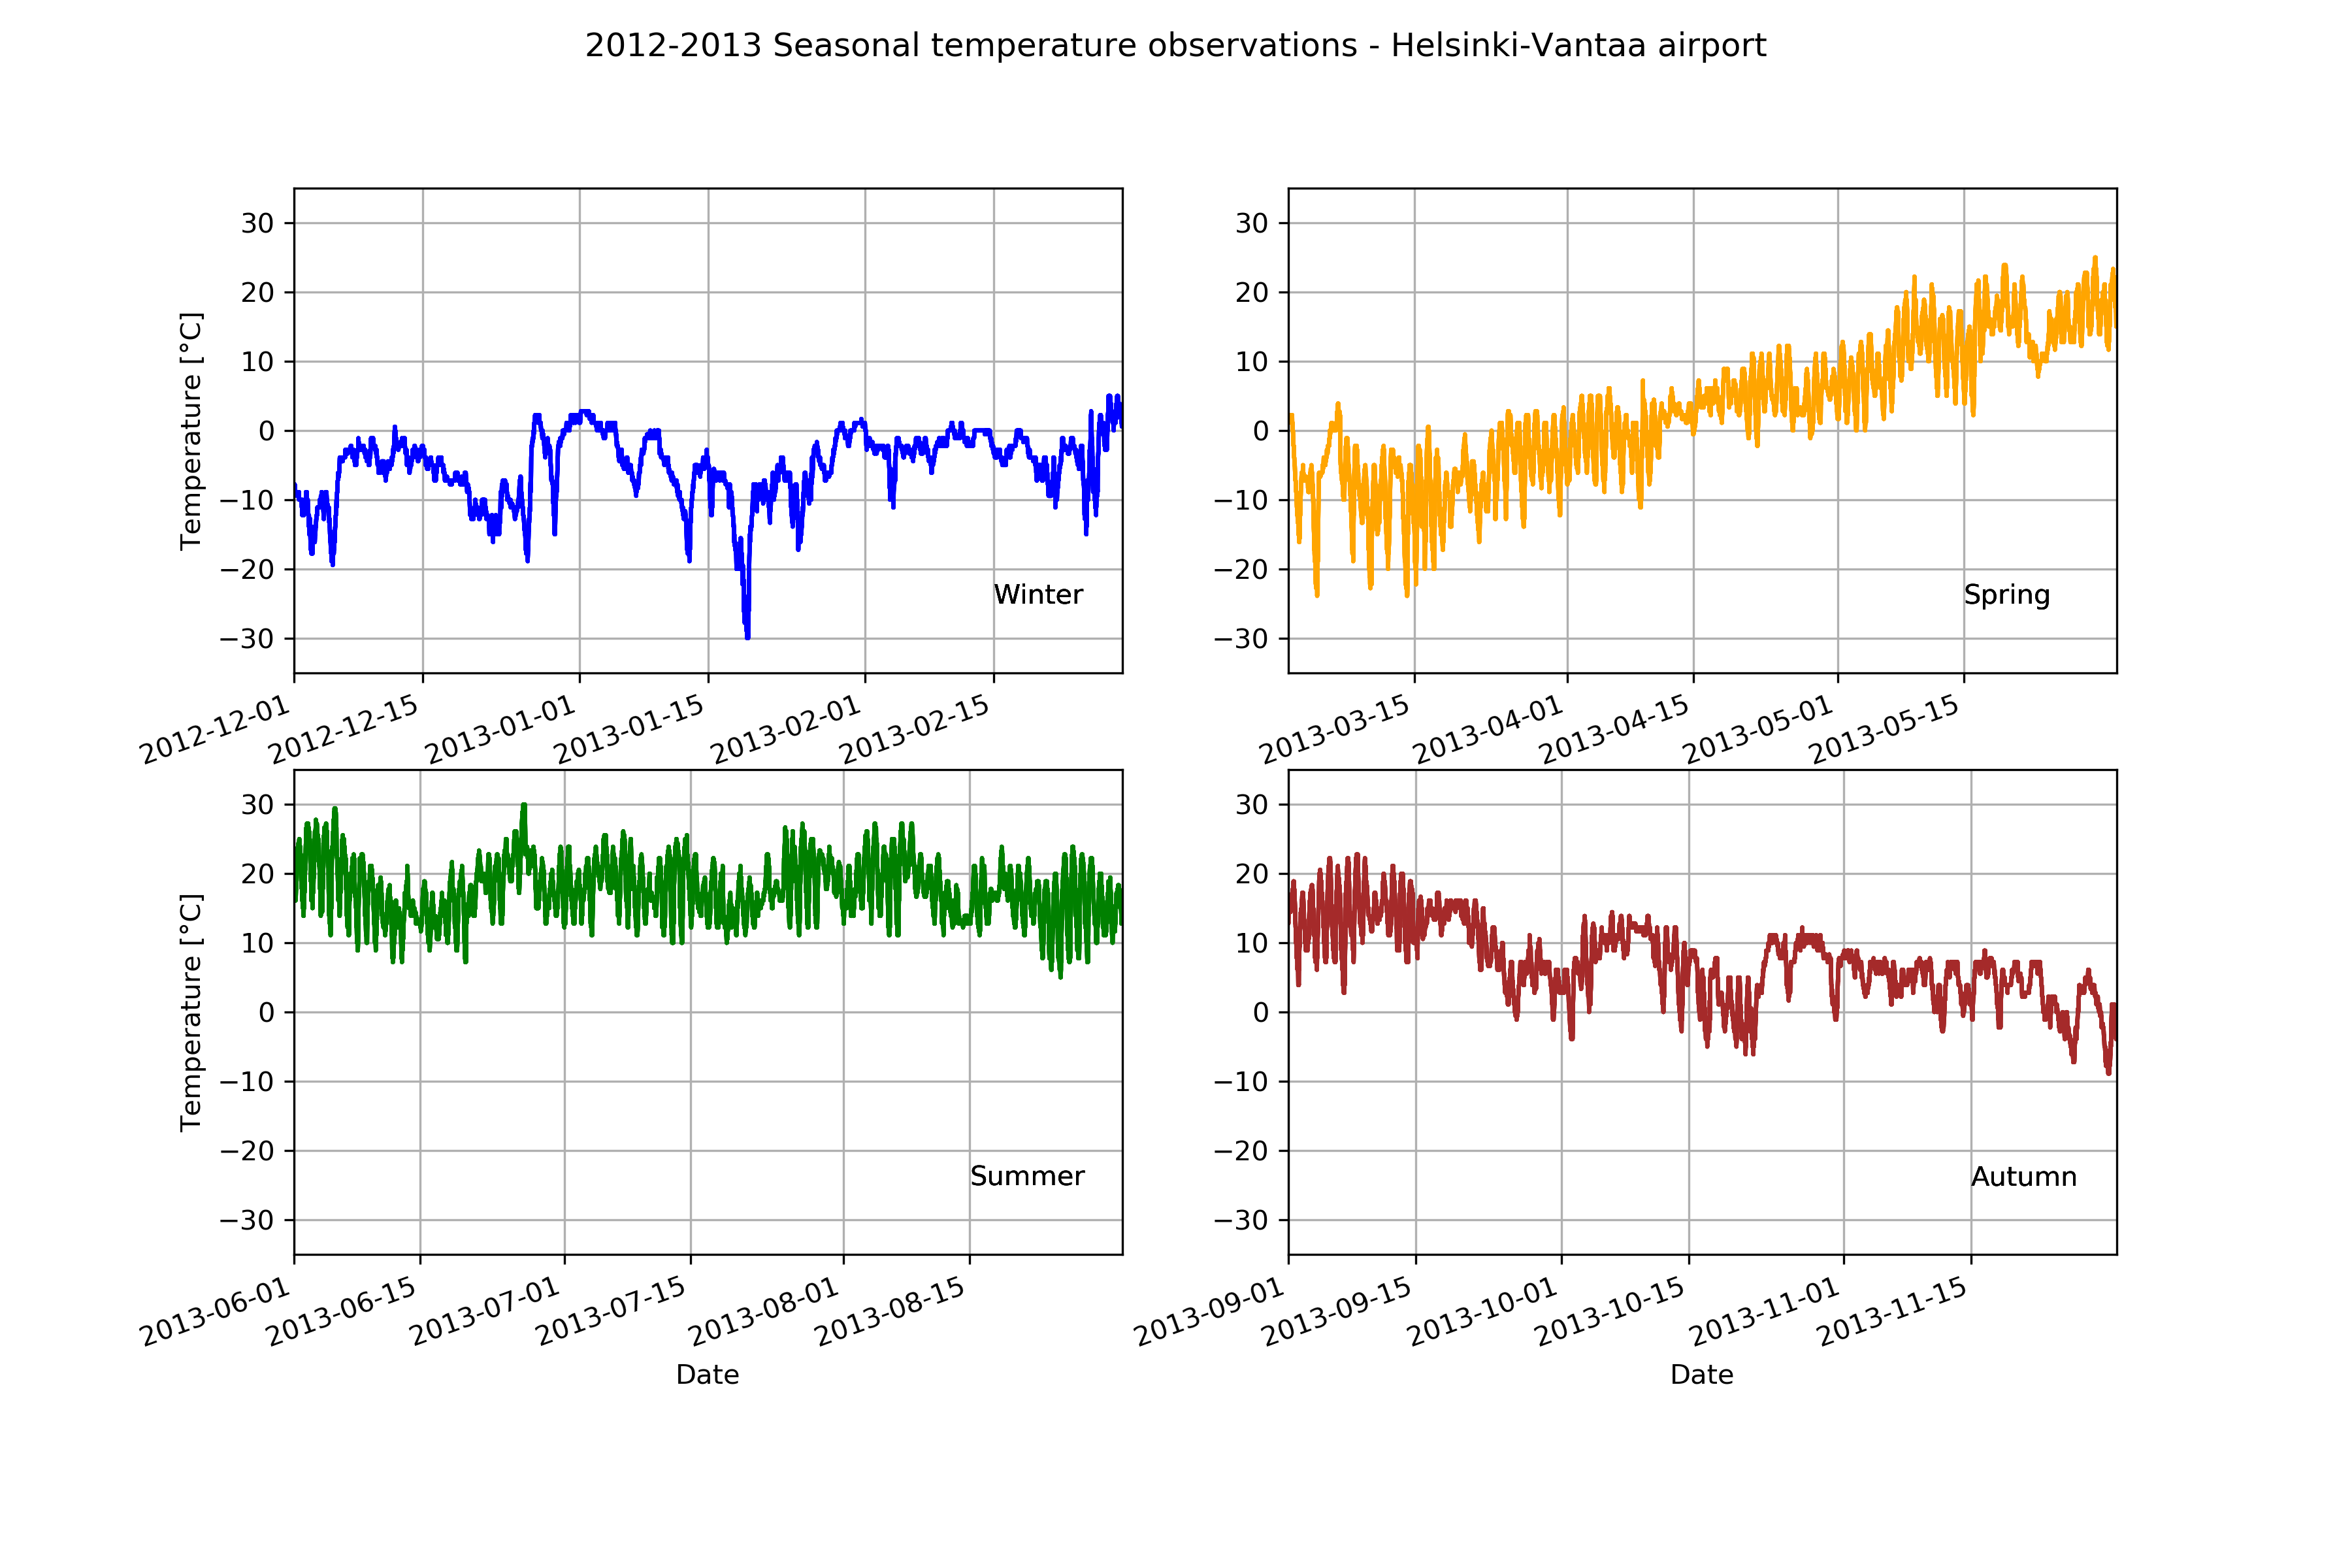 Figure 4.10. An example of seasonal temperatures for 2012-2013 using pandas and Matplotlib.